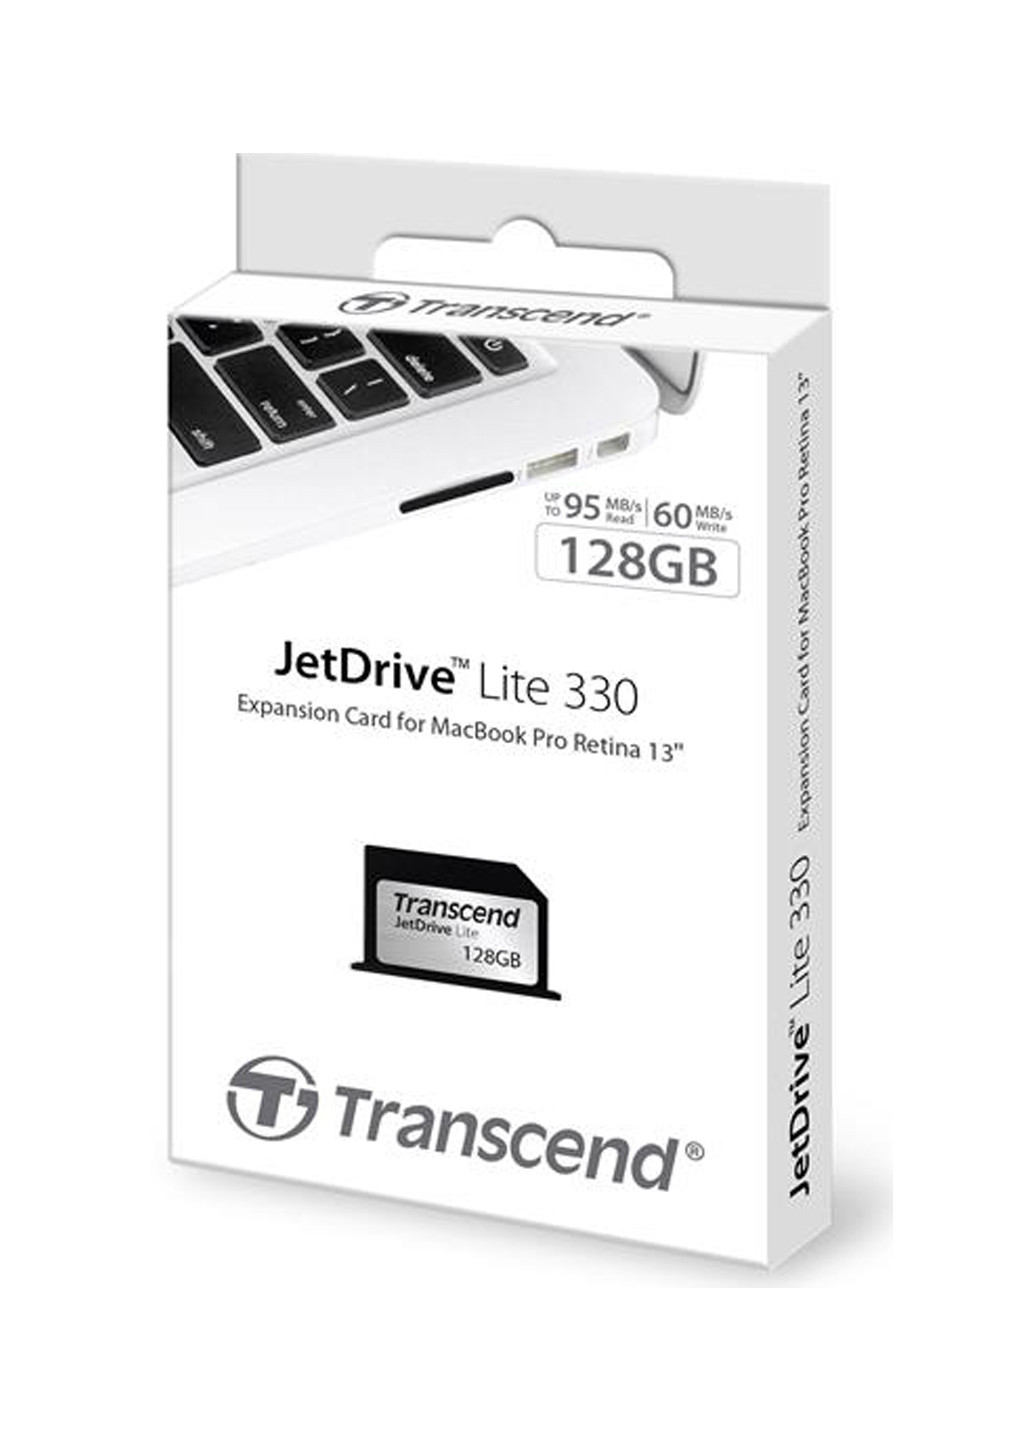 Карта пам'яті JetDrive Lite 128GB for MacBook Pro Retina 13 Late 2012 - Early 2015 (TS128GJDL330) Transcend карта памяти transcend jetdrive lite 128gb for macbook pro retina 13" late 2012 - early 2015 (ts128gjdl330) (130843193)